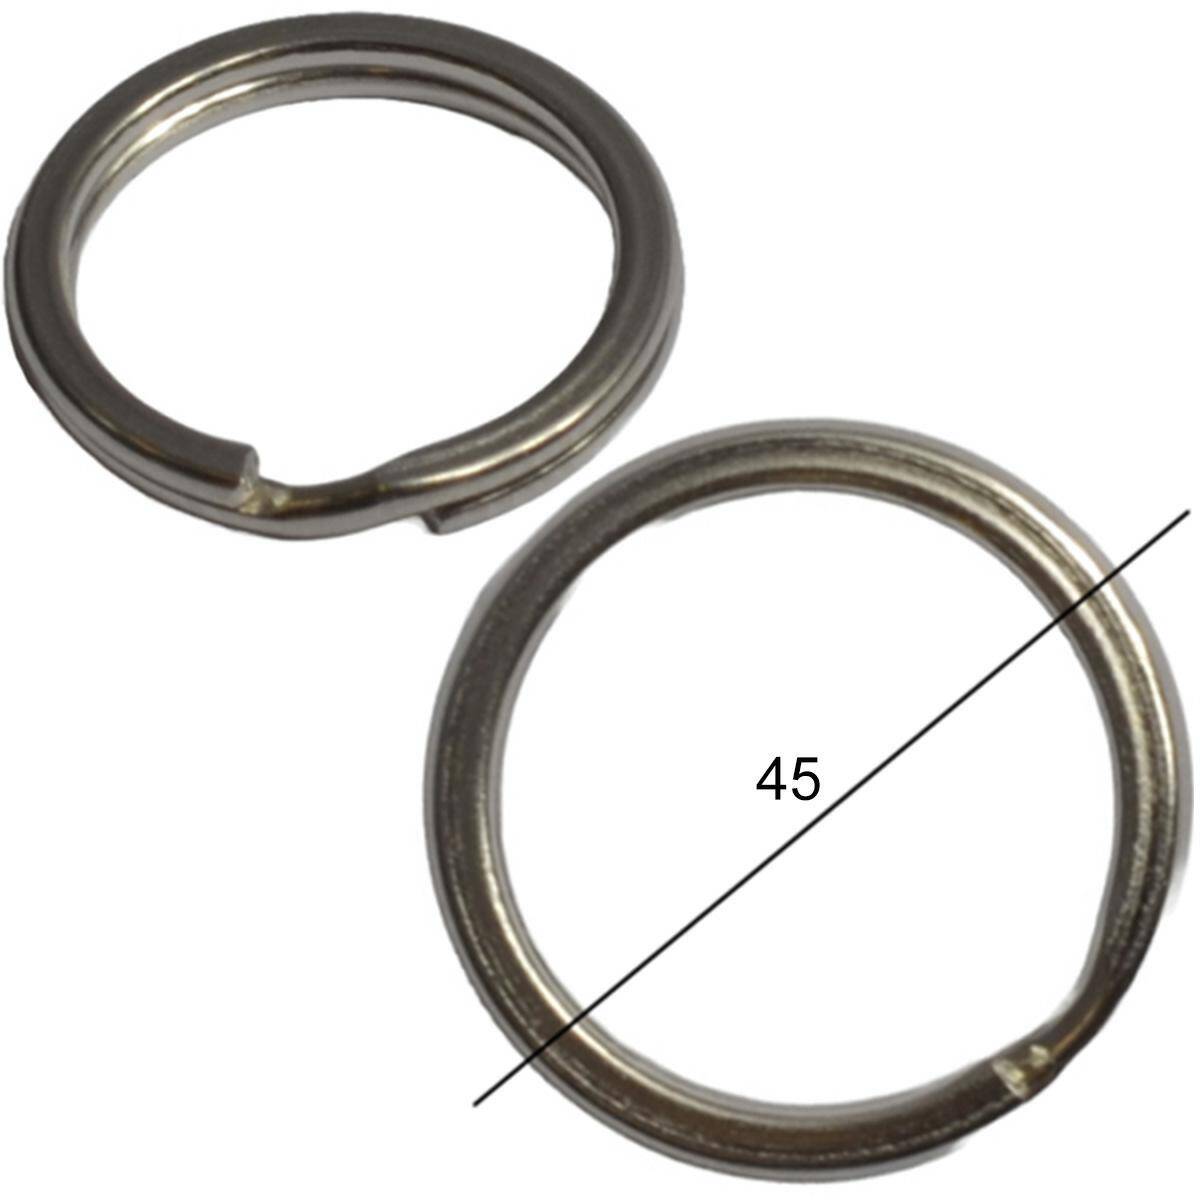 Key rings - flat - 45 mm